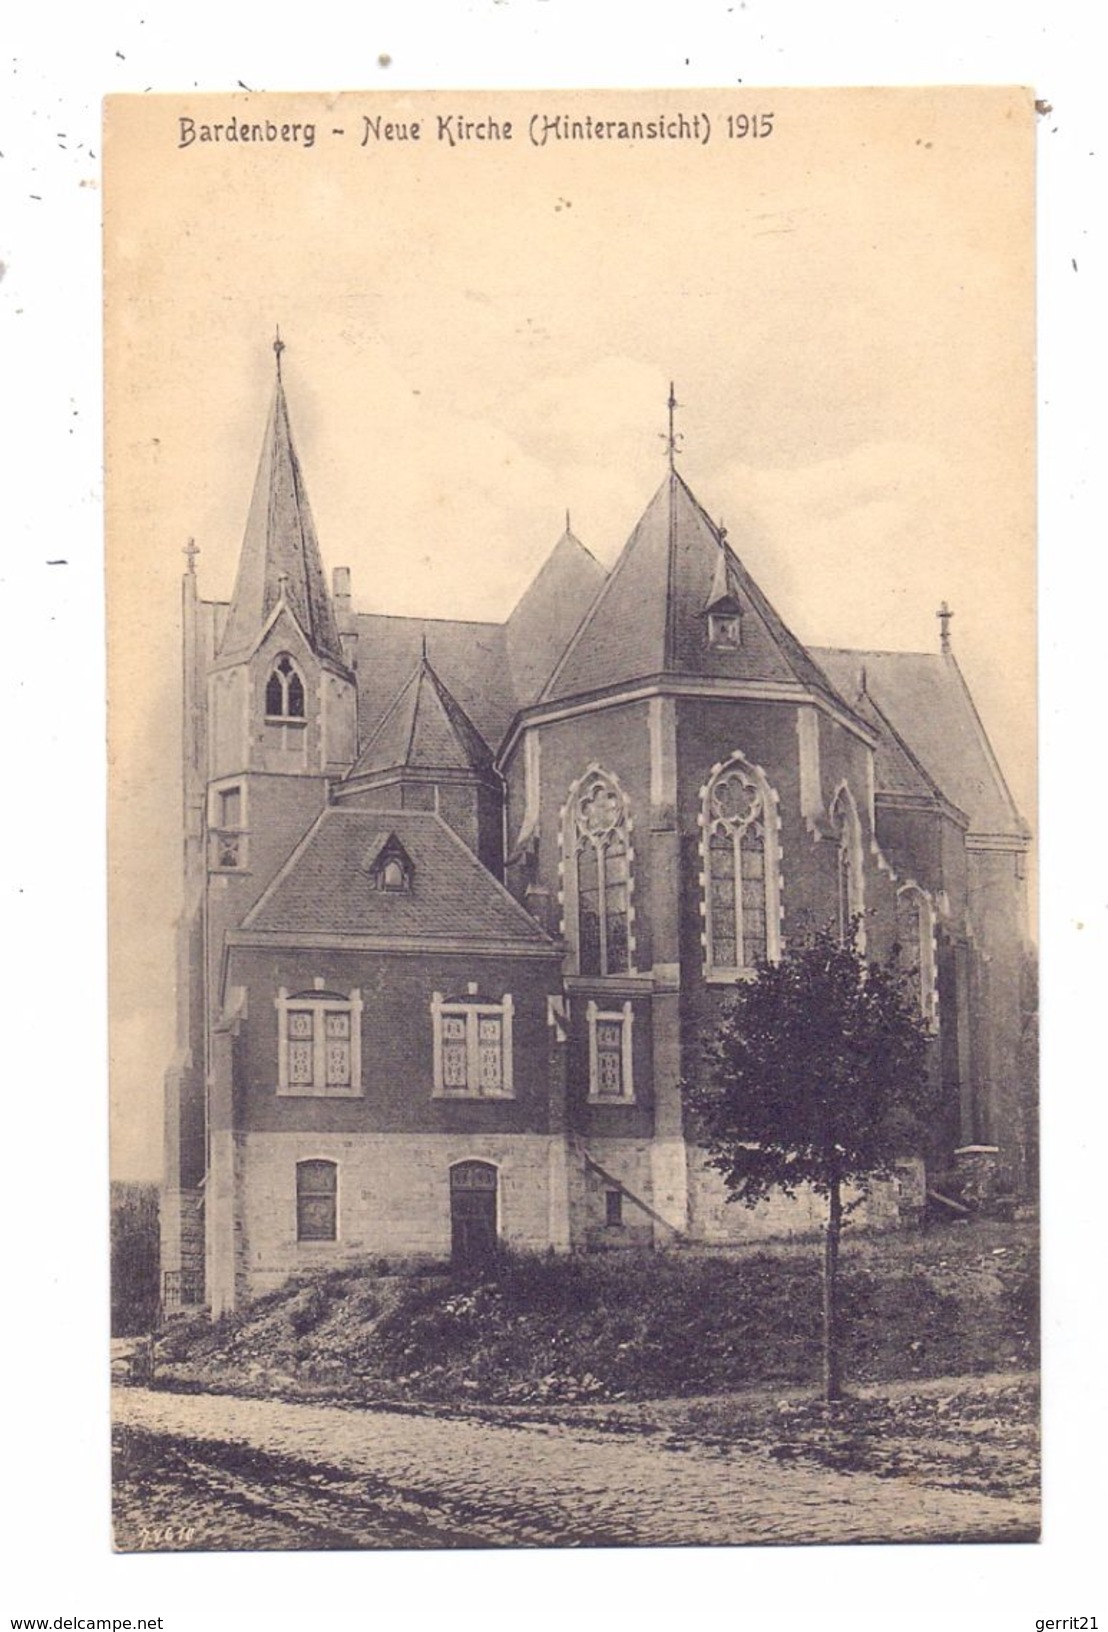 5102 WÜRSELEN - BARDENBERG, Neue Kirche, 1915 - Würselen